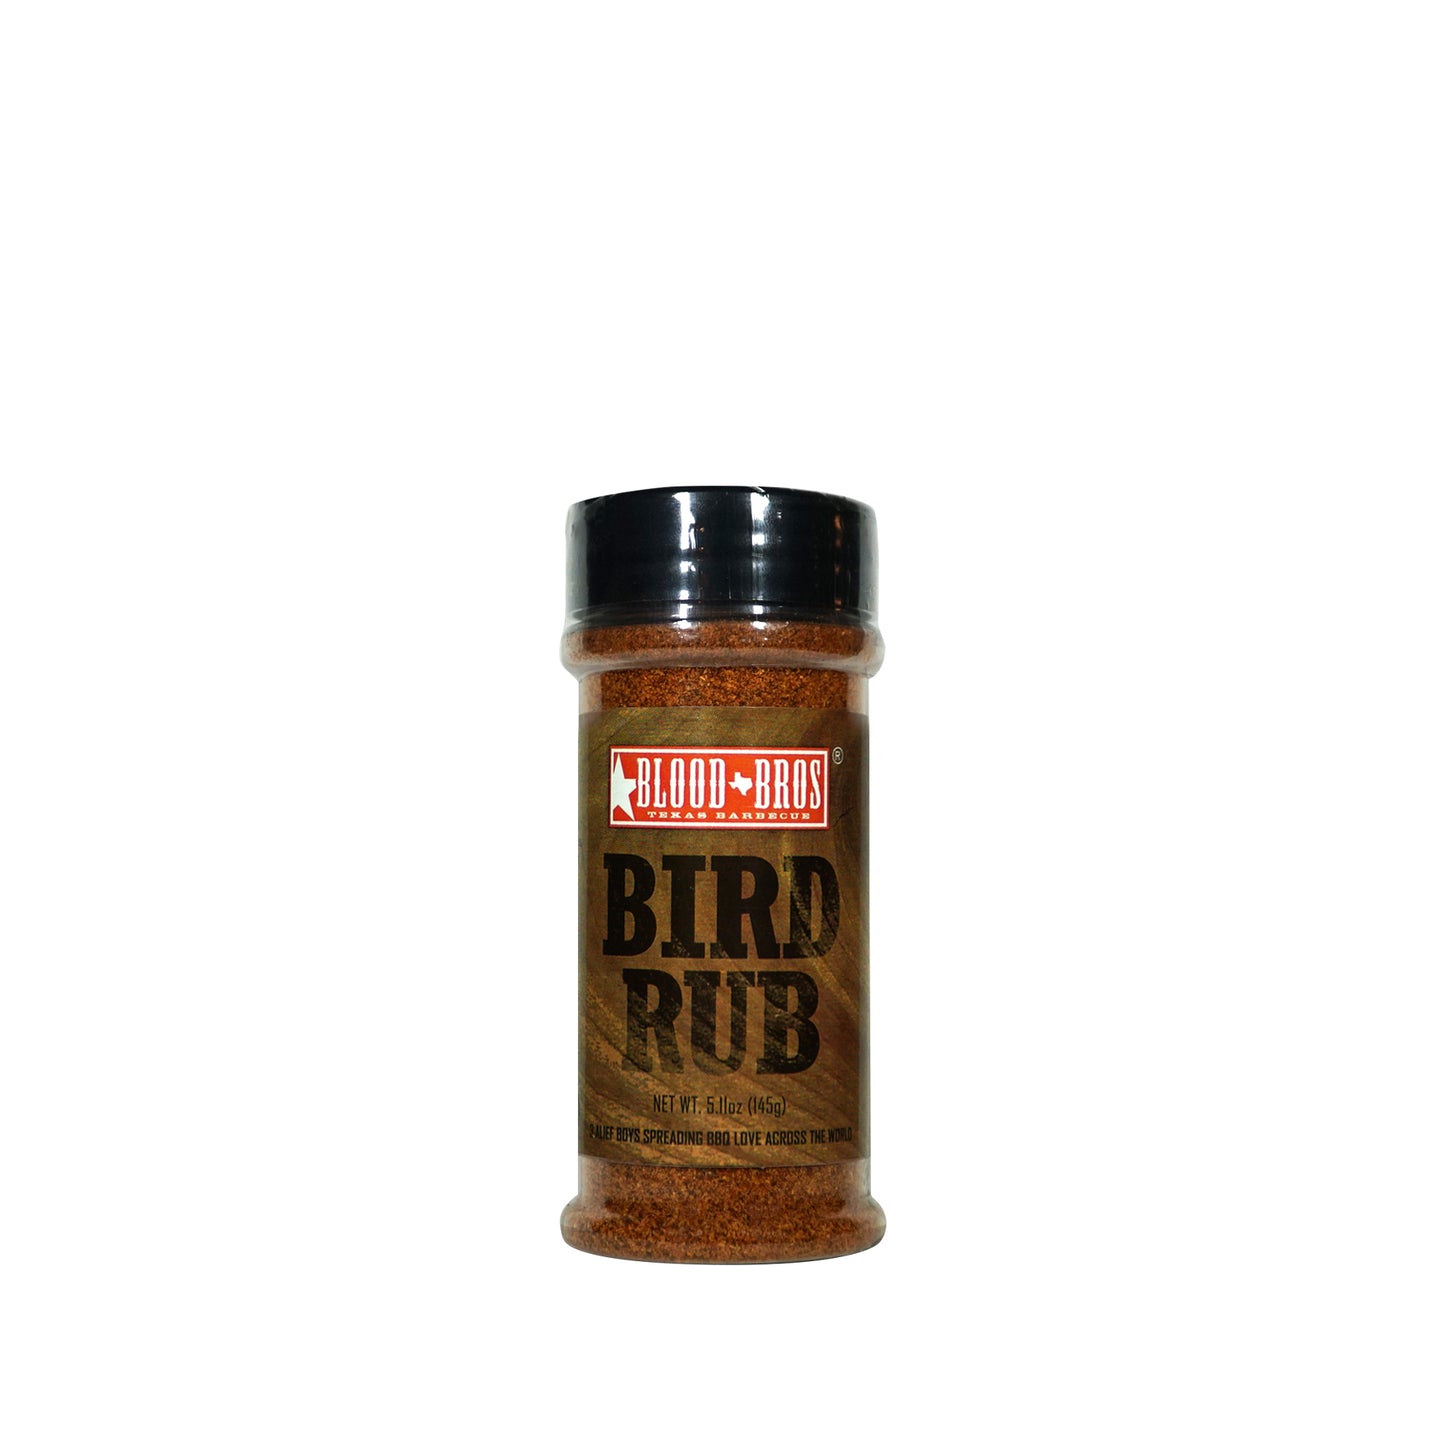 Bird Rub (Net Wt. 5.11oz)